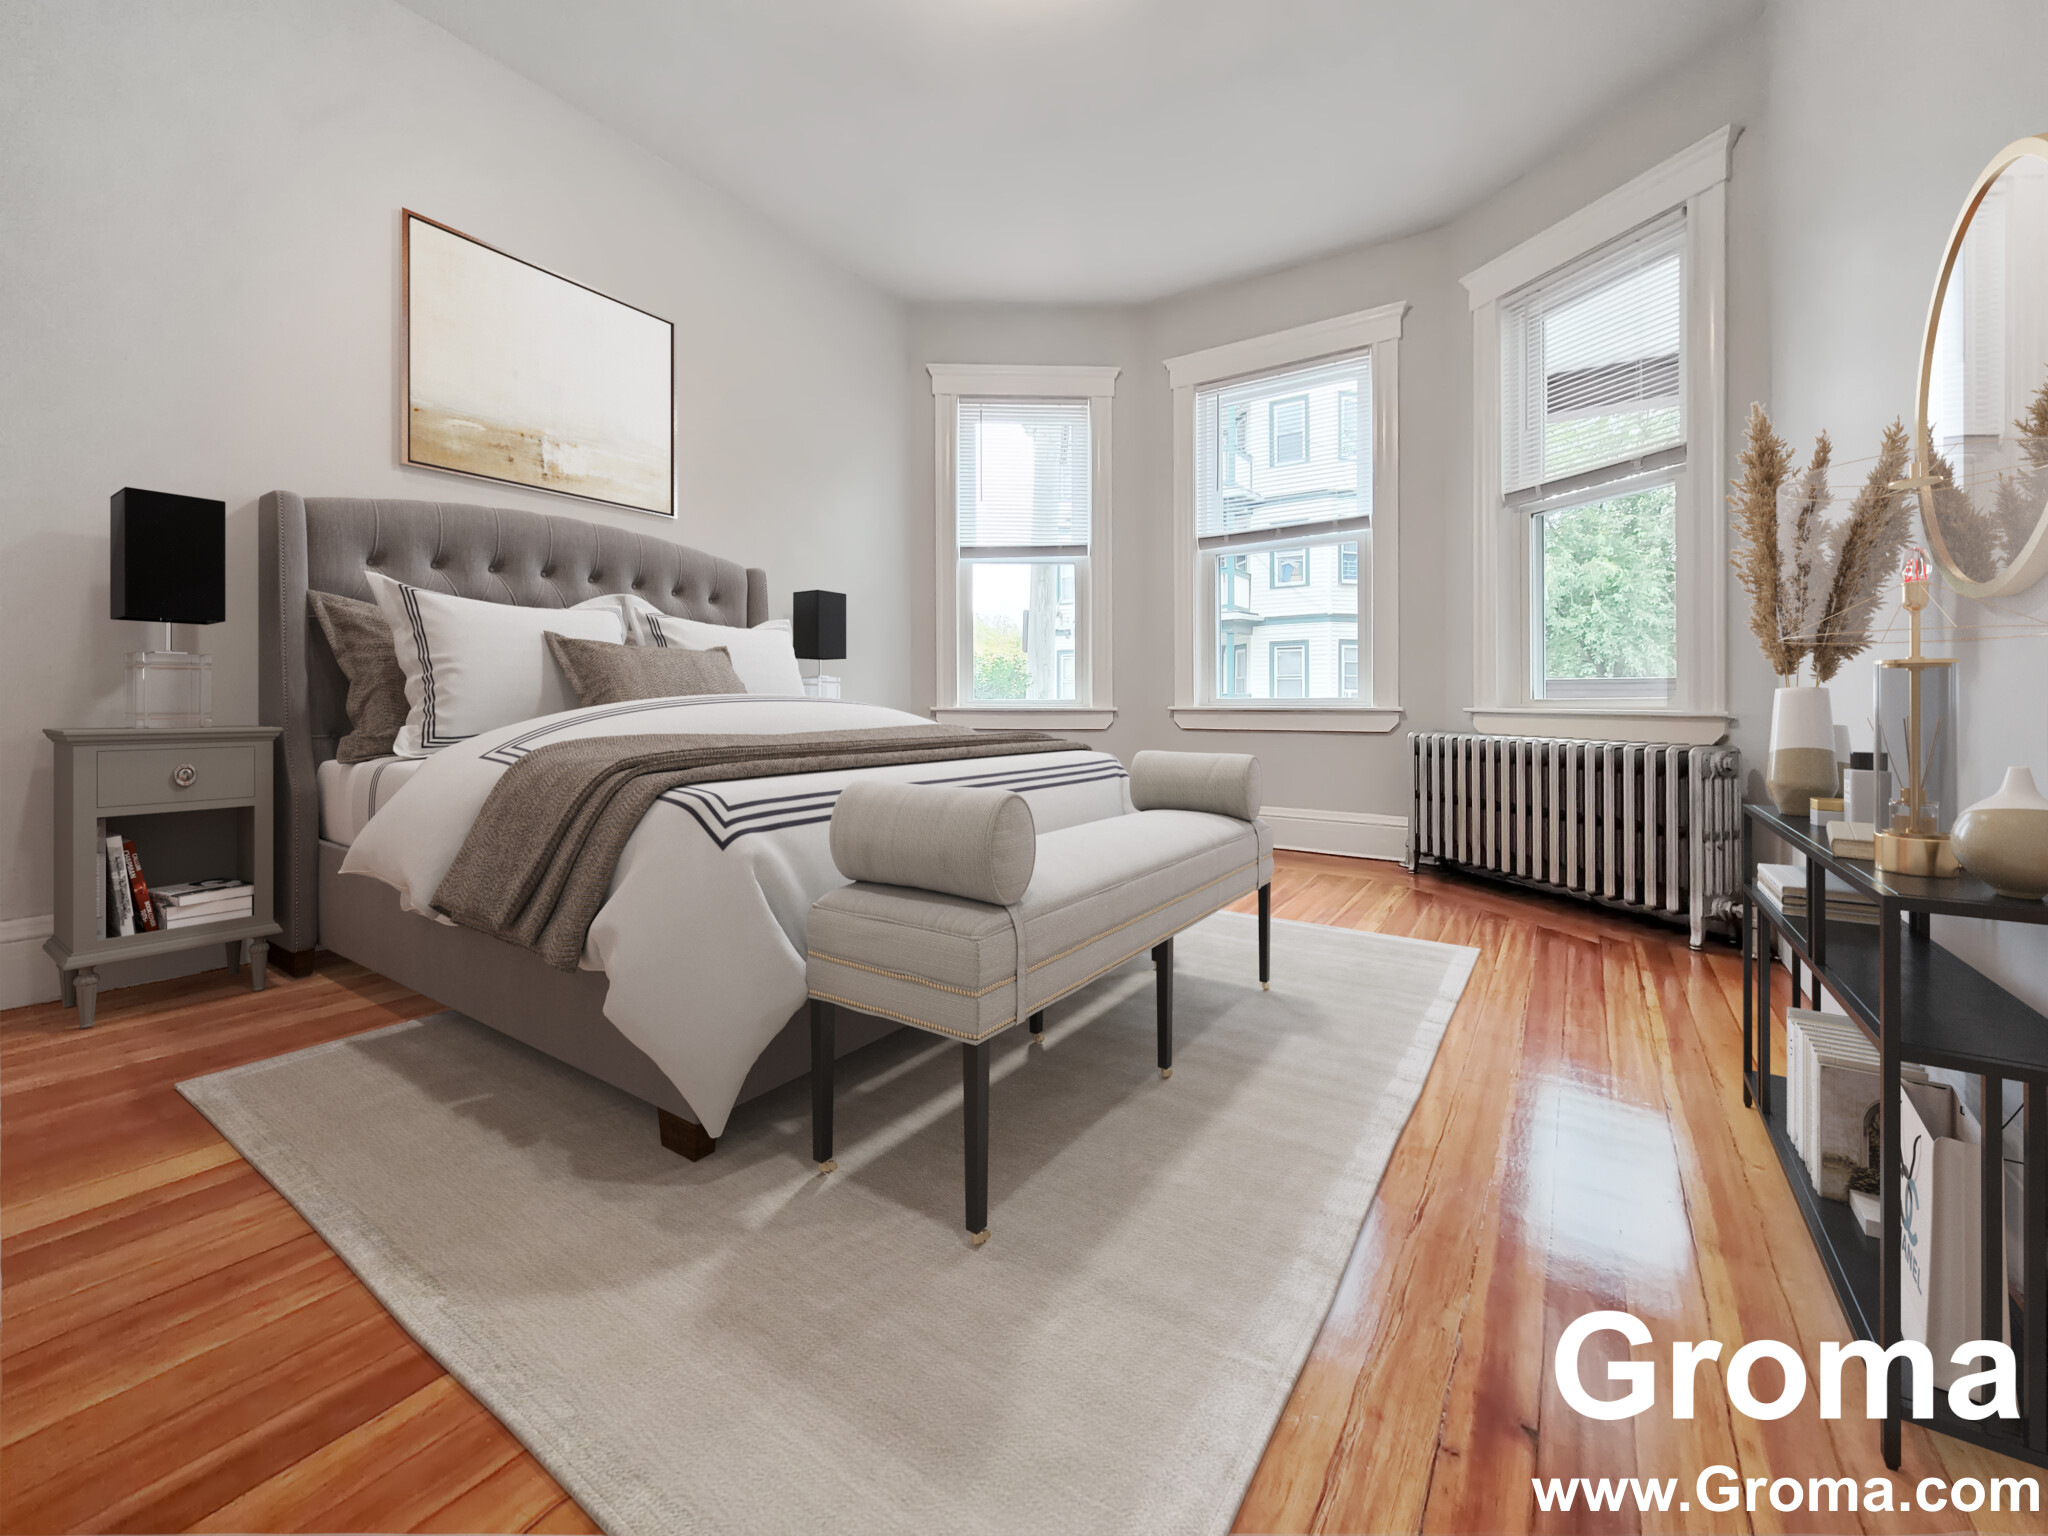 4.8 Beds, 1 Bath apartment in Boston, Dorchester for $2,495